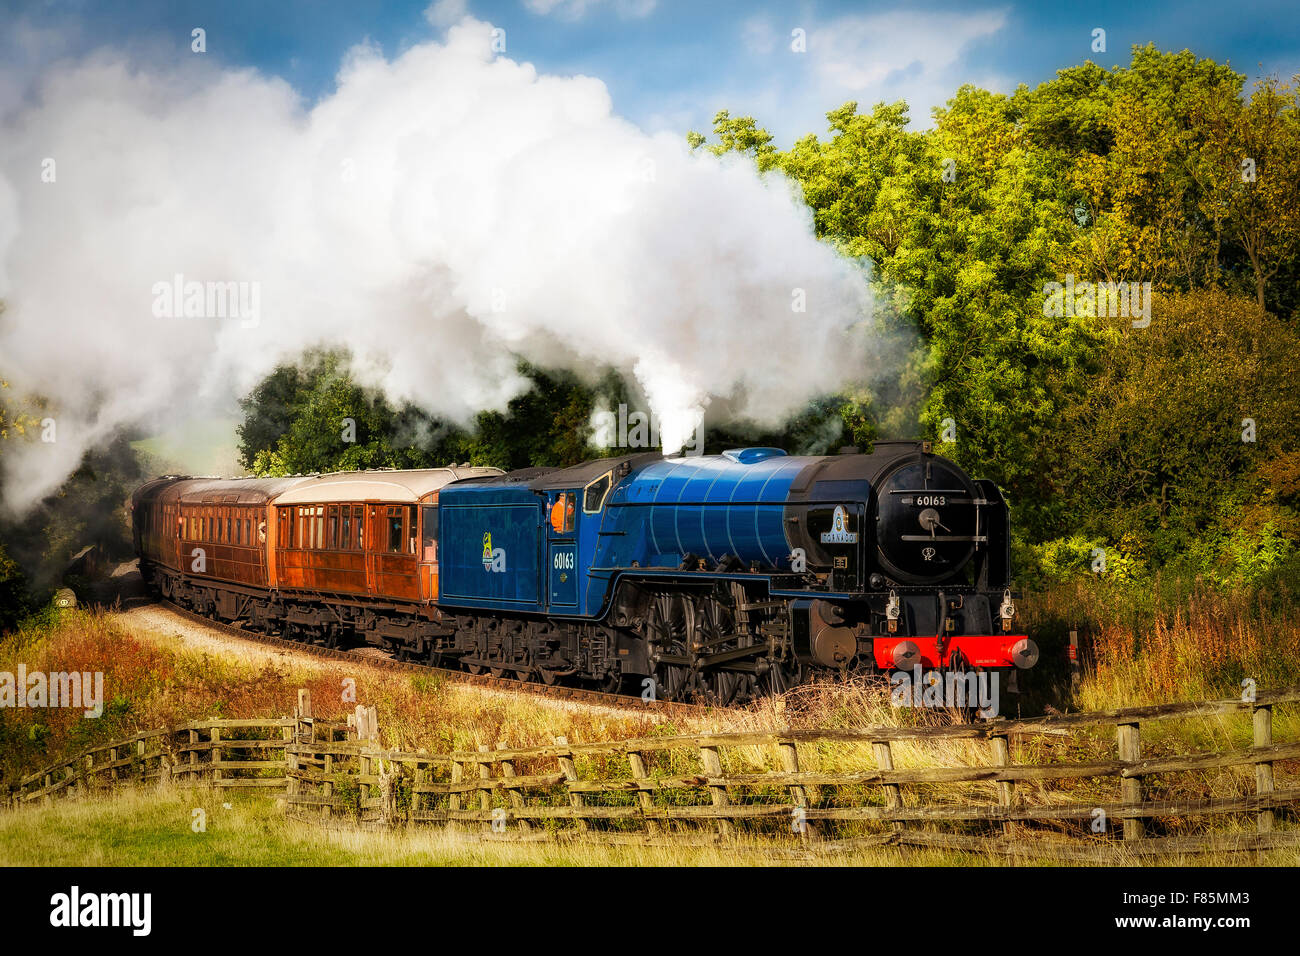 60163 A1 peppercorn steam locomotive Tornado on the north Yorkshire moors railway Stock Photo